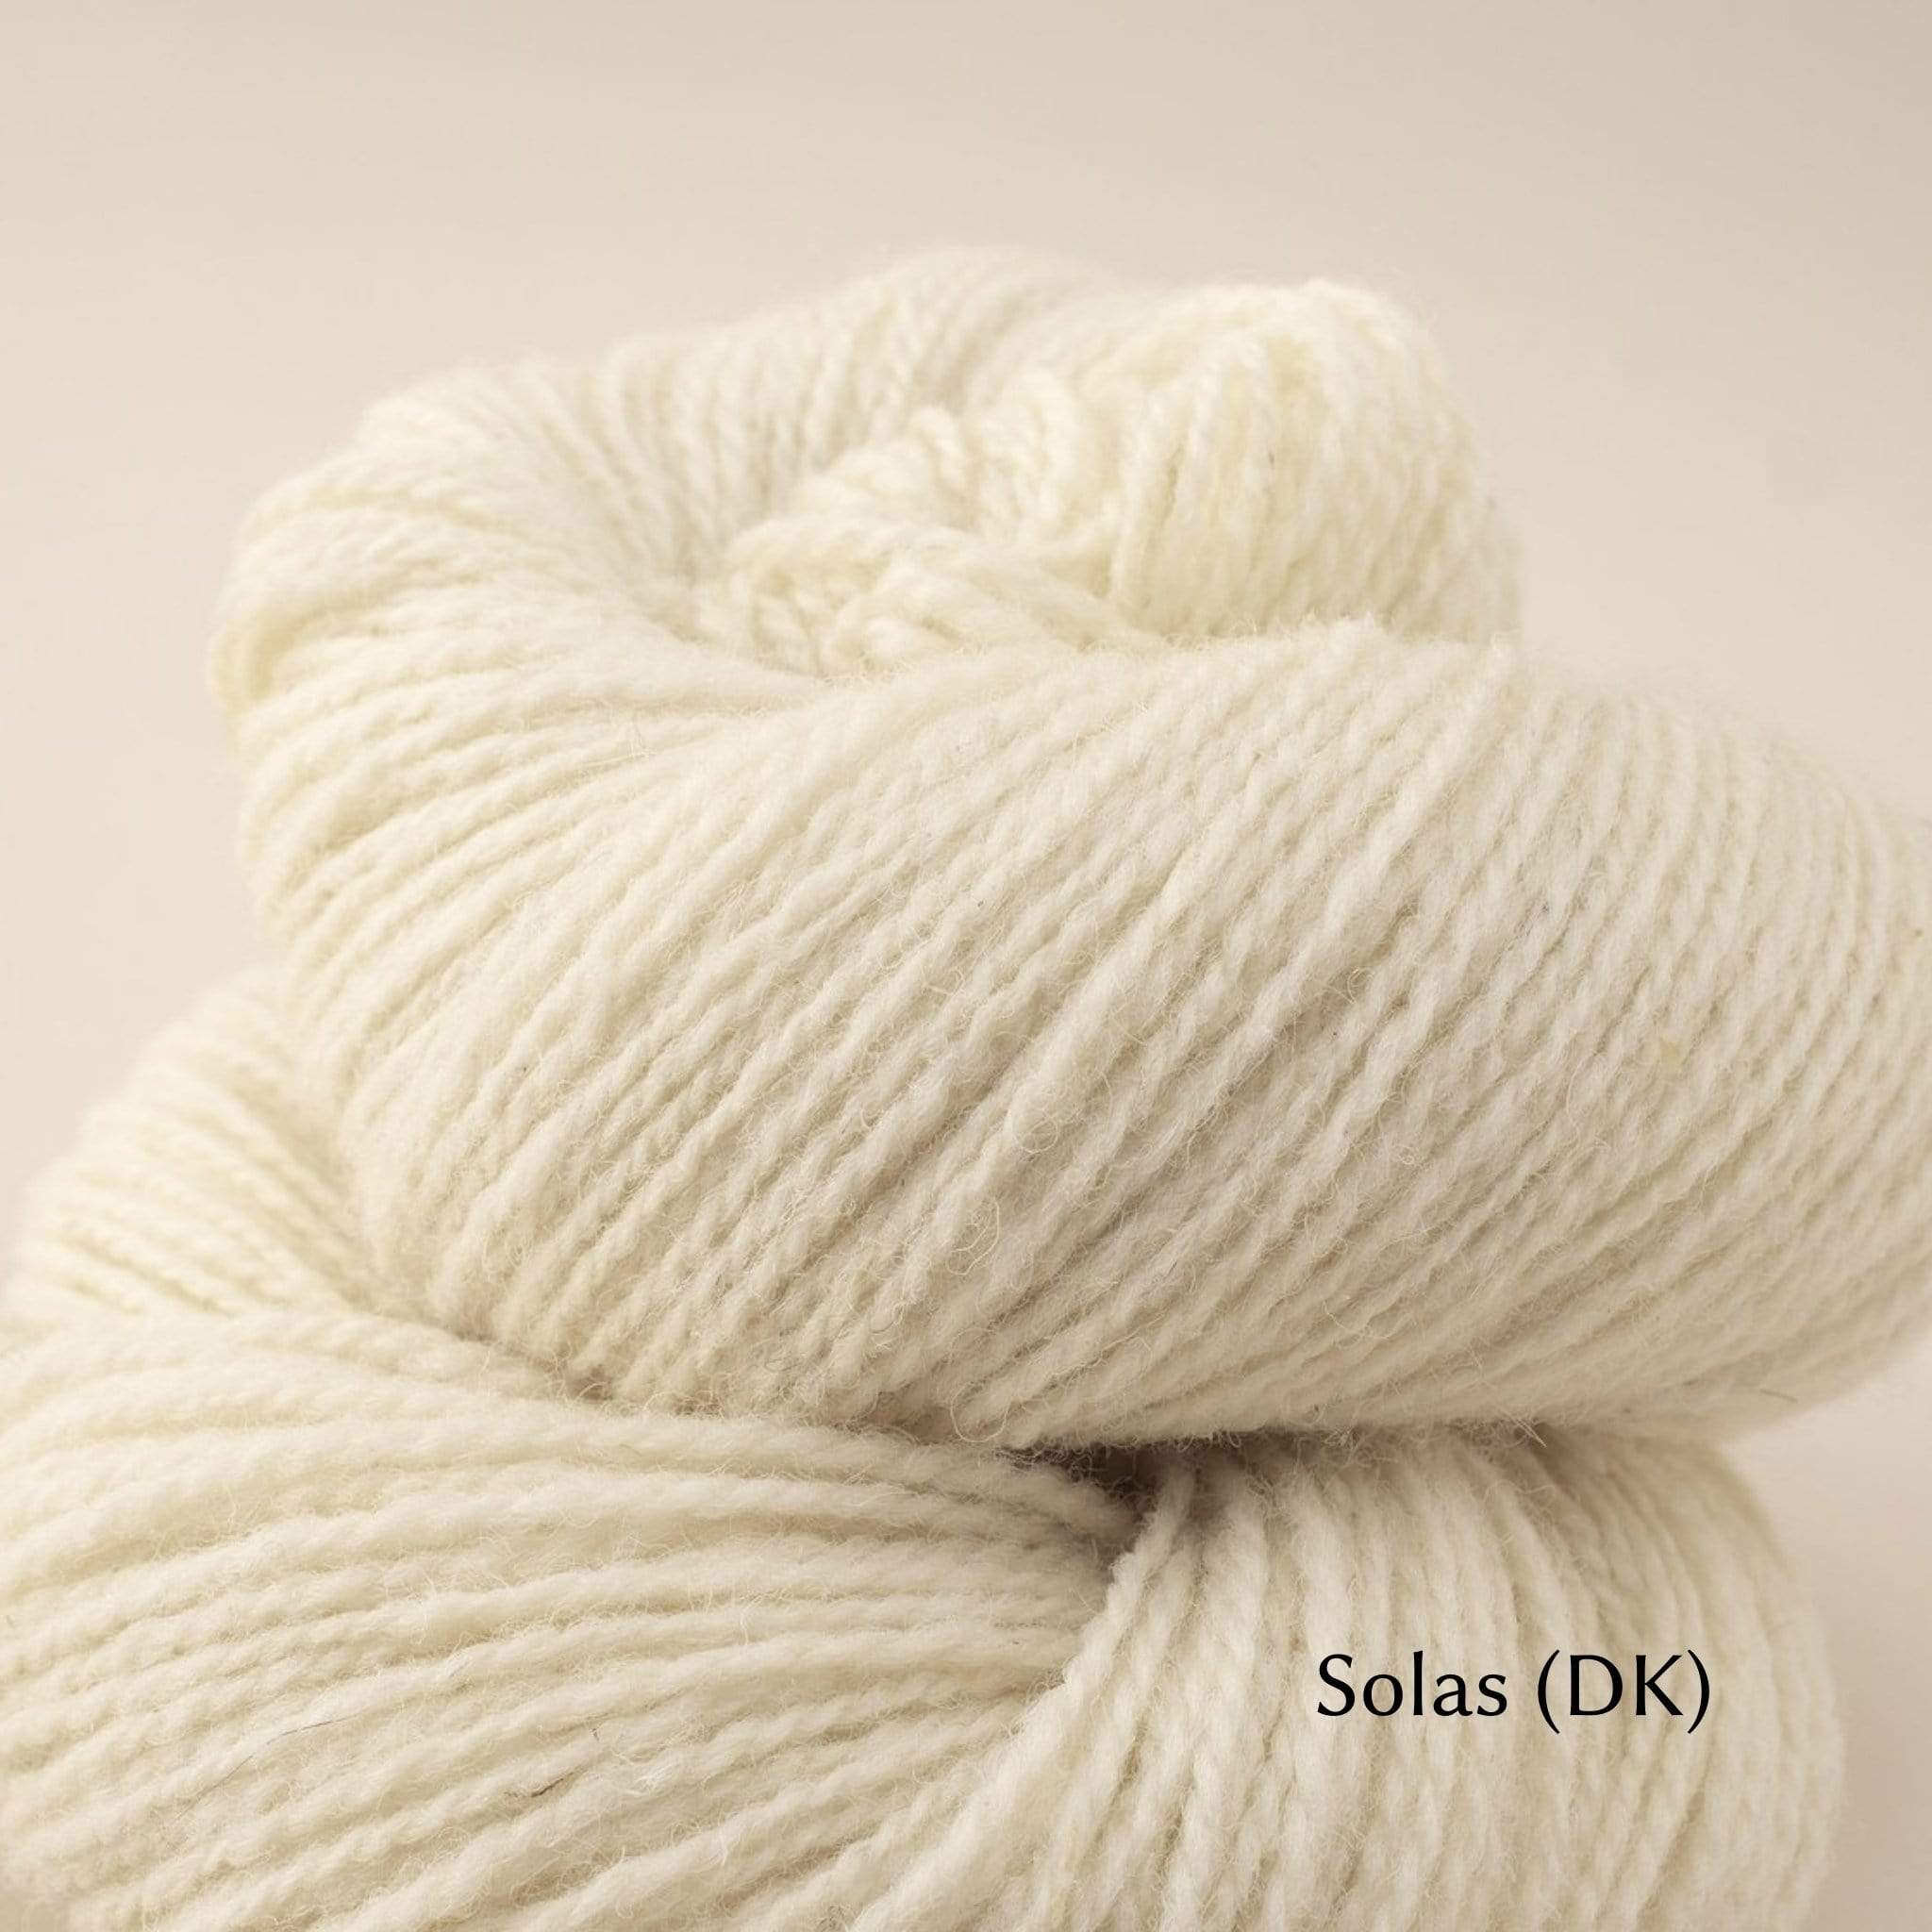 The Woolly Thistle Uist Wool DK yarn in Solas (cream)